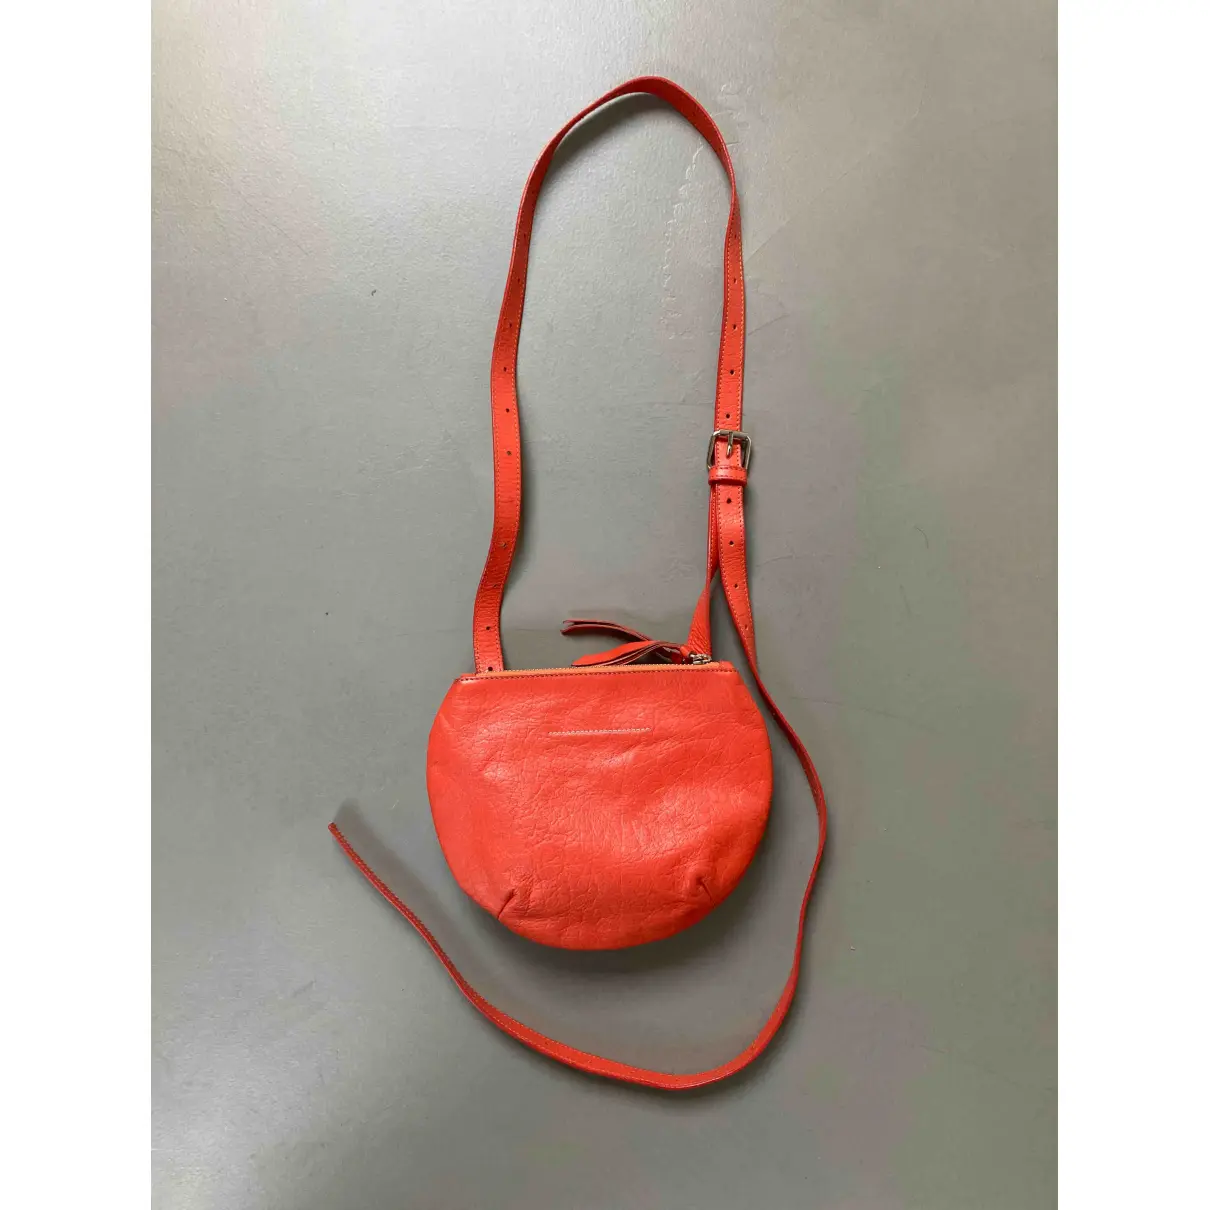 Buy MM6 Leather crossbody bag online